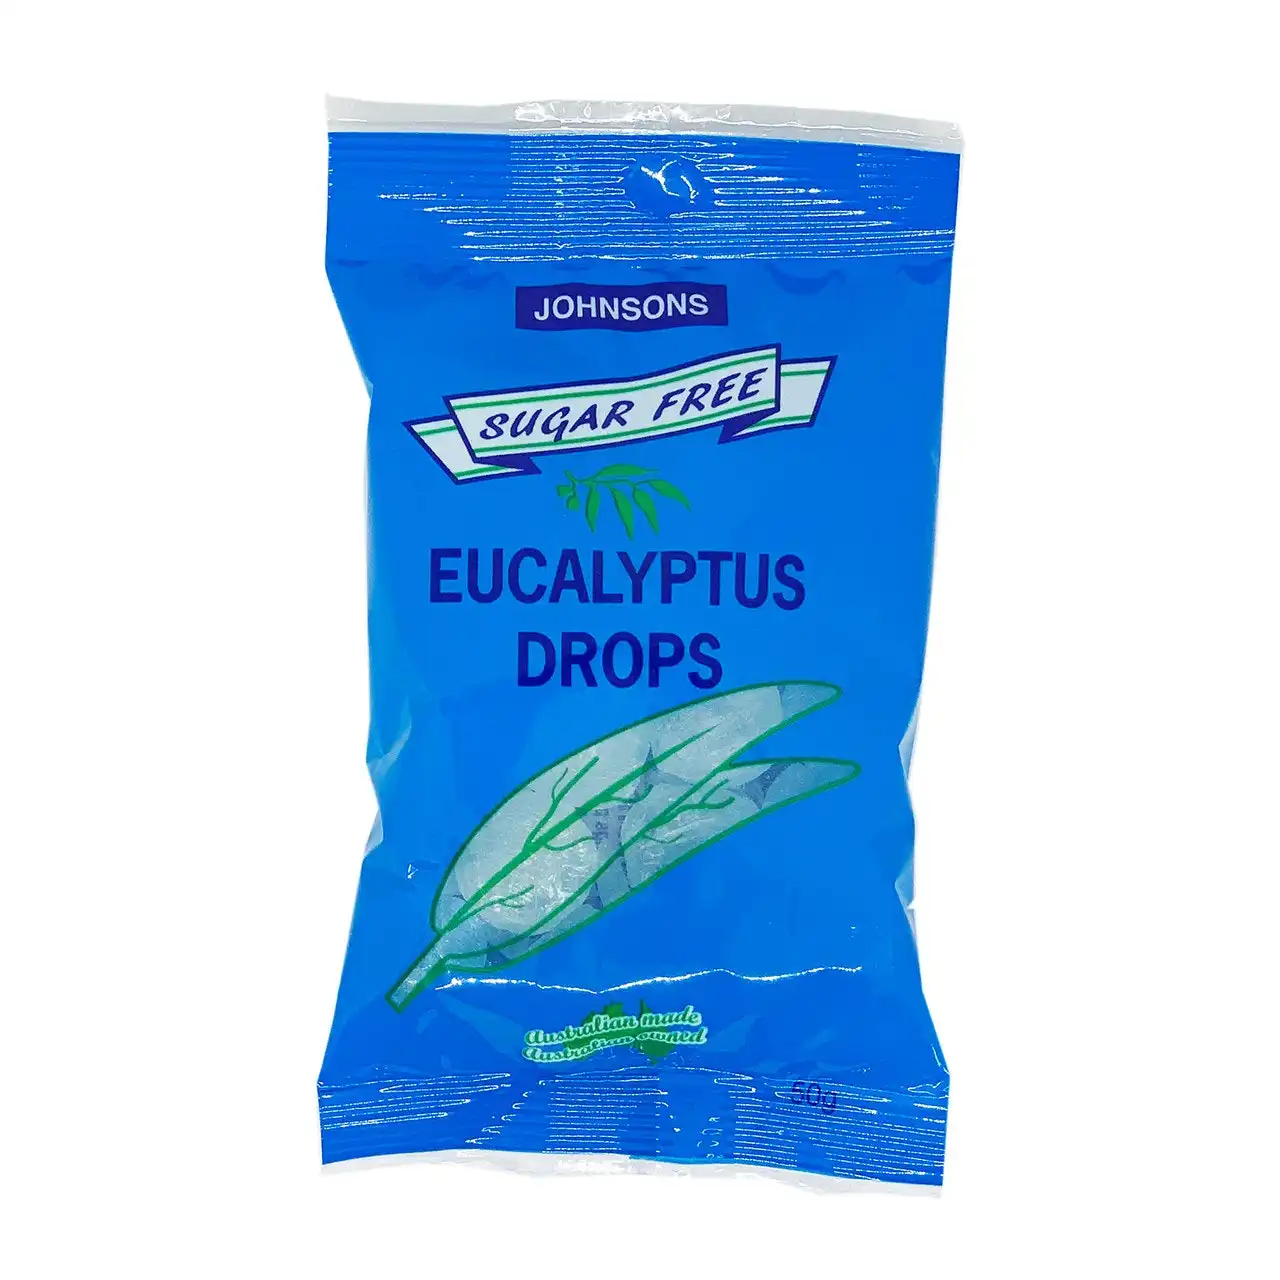 Johnsons Sugar Free Eucalyptus Drops 50g